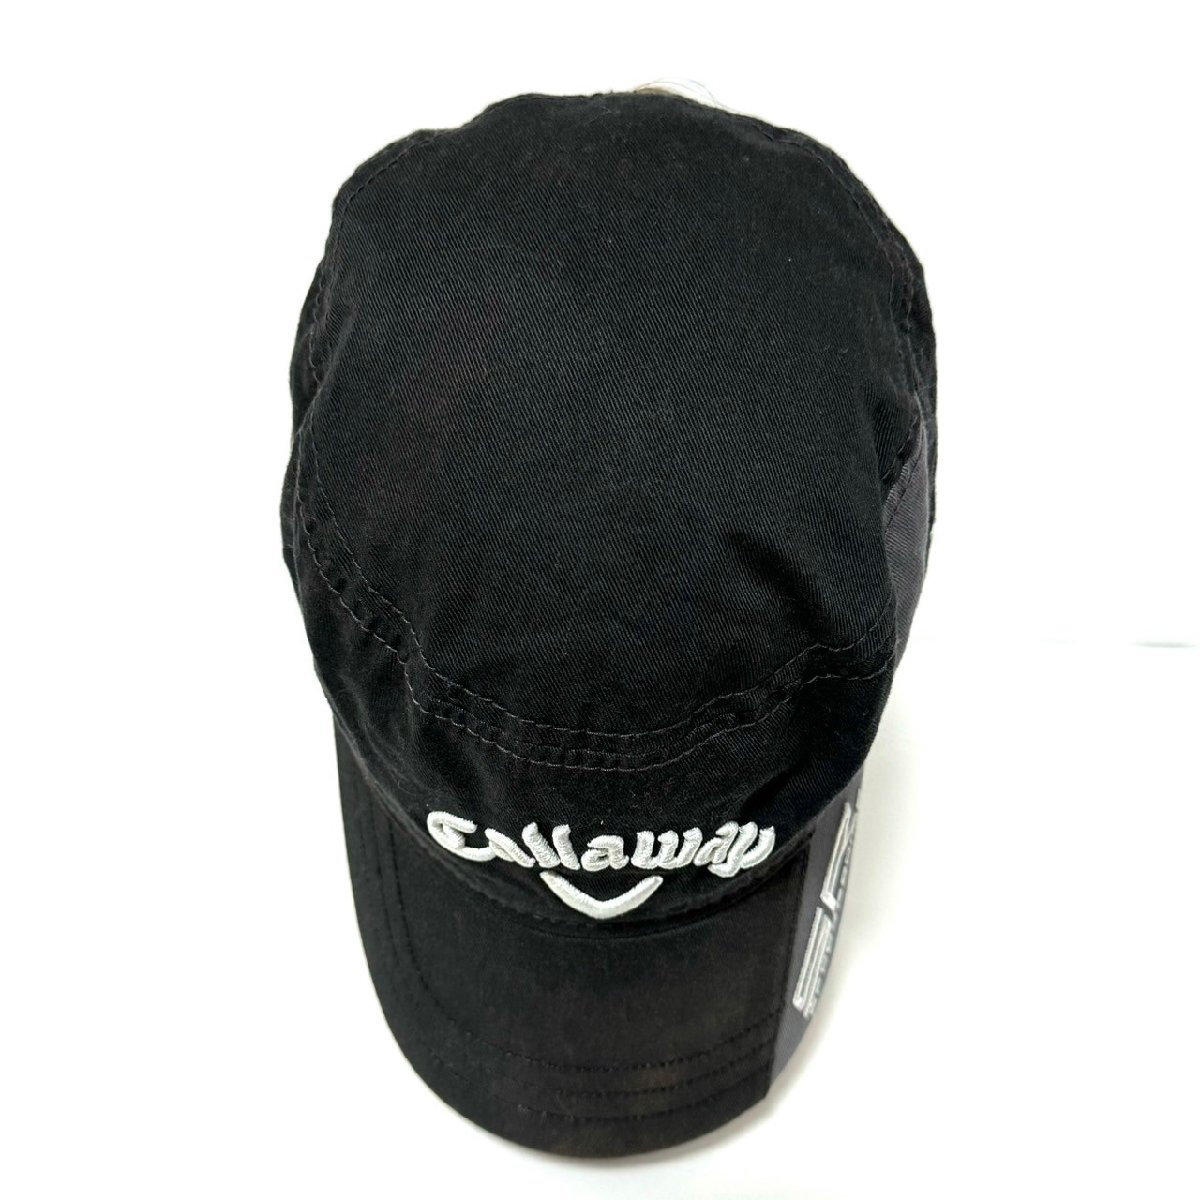 (^w^)b Callaway GOLF Callaway Golf Work колпак шляпа цельный Logo SR LEGACY BIG BERTHA ODYSSEY чёрный серия FREE 57~59.C0739EE